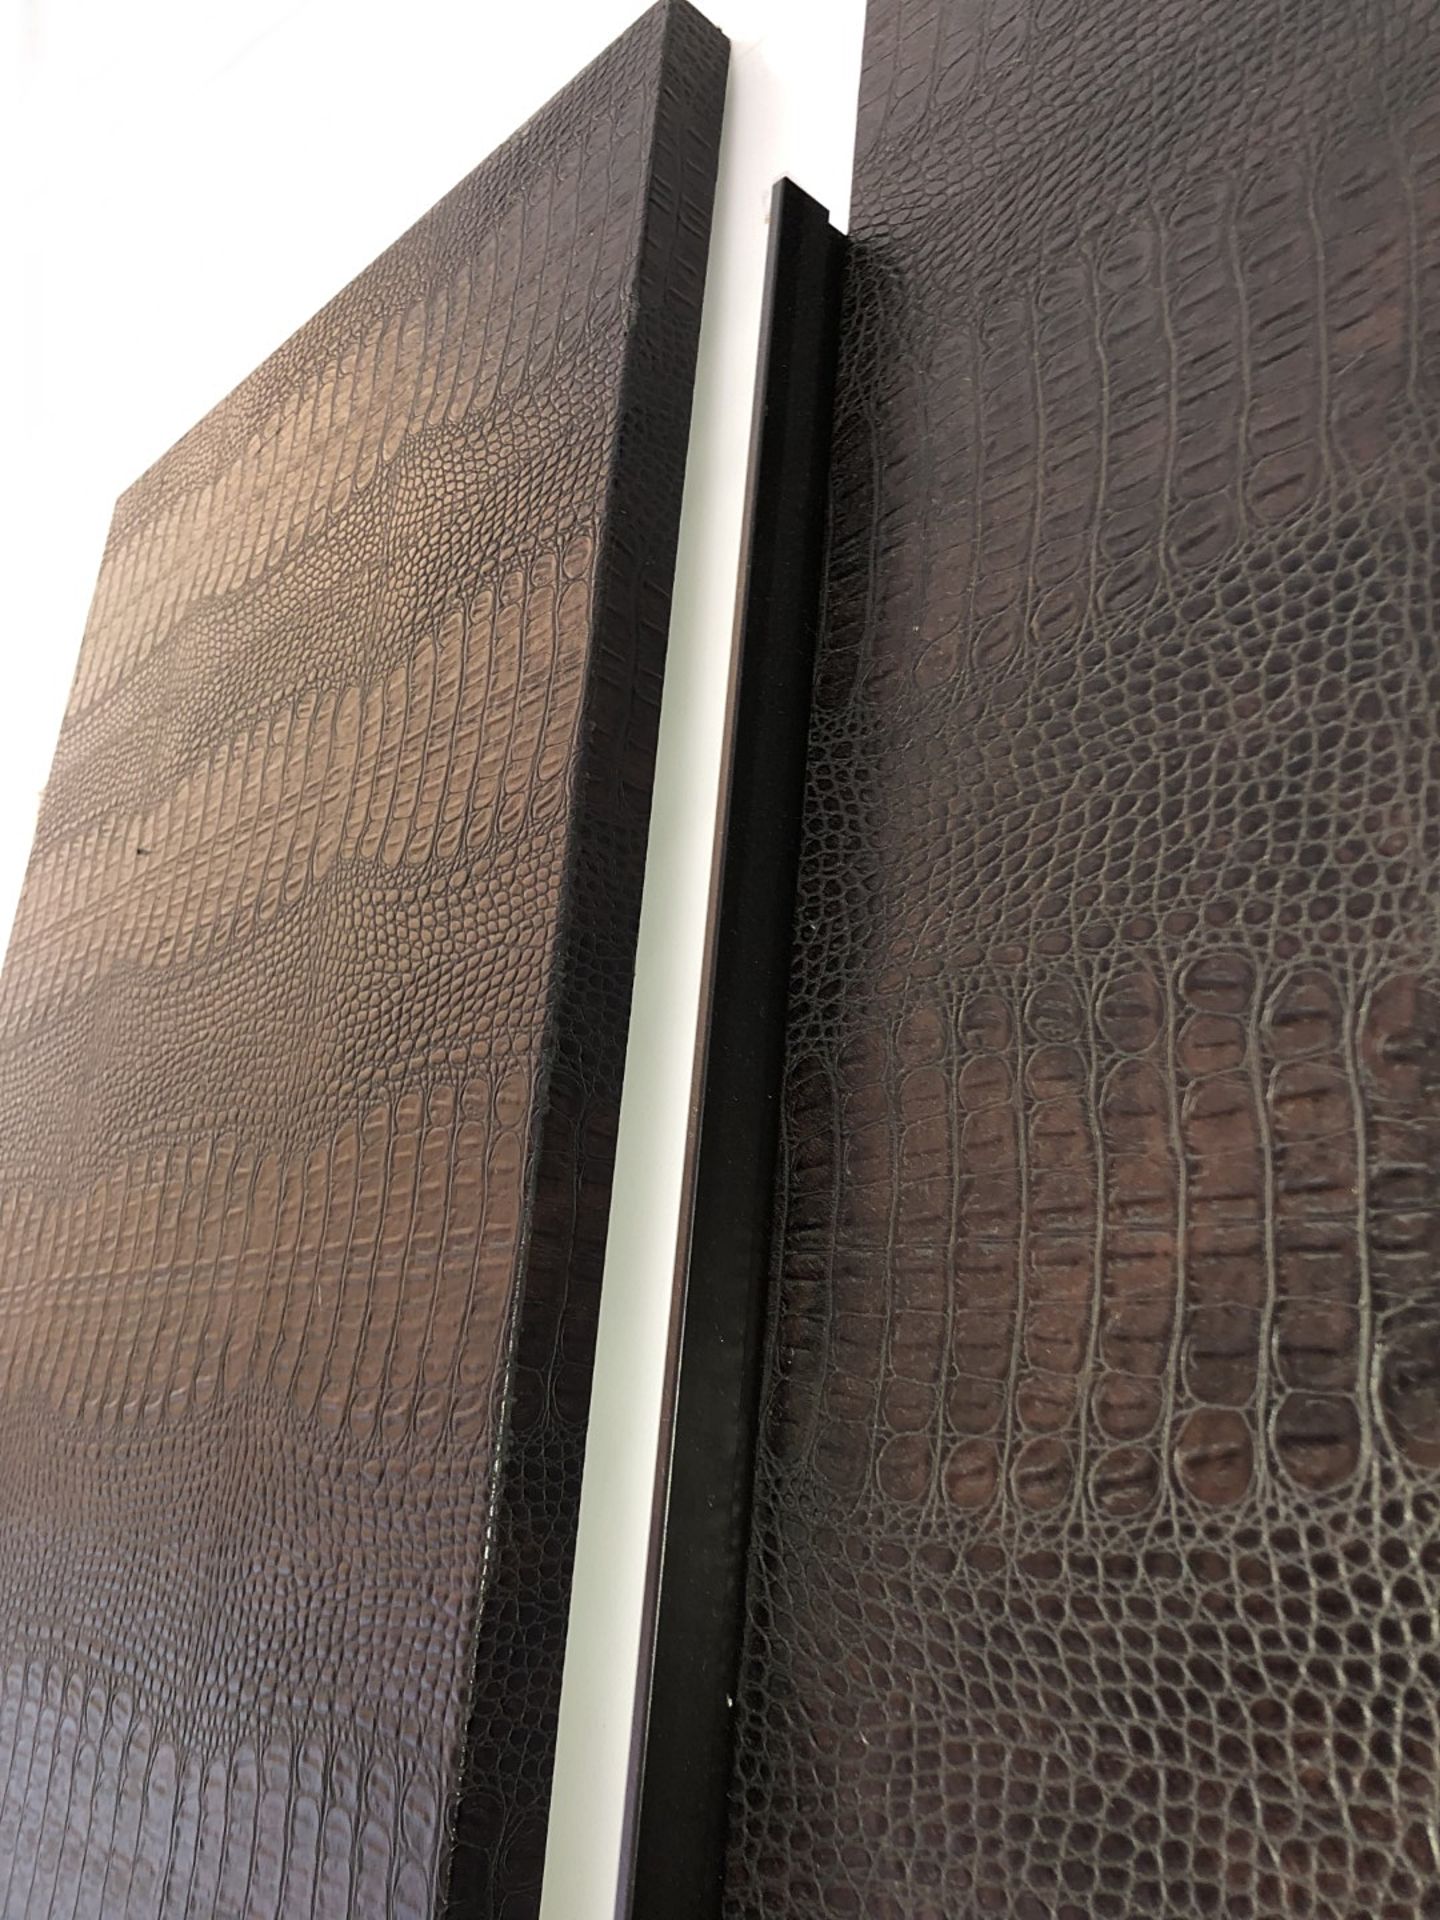 A Pair of Crocodile Skin Design Wardrobe Doors- CL380 - Location: Altrincham WA14 - NO VAT - Image 2 of 7